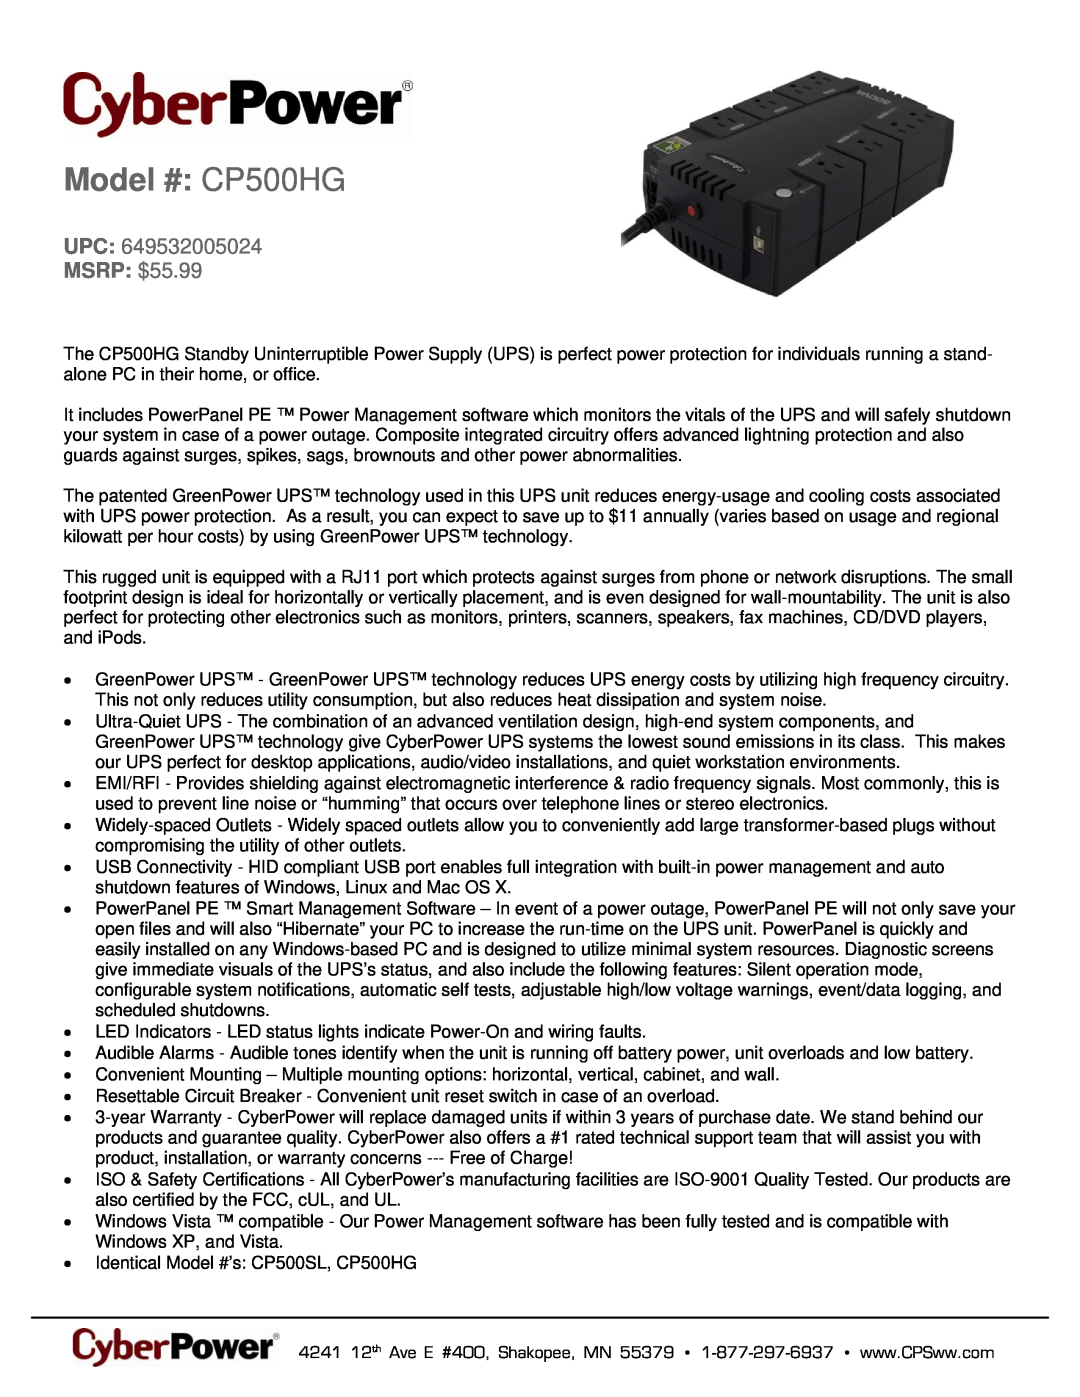 CyberPower Systems 649532005024 warranty Model # CP500HG, MSRP $55.99 